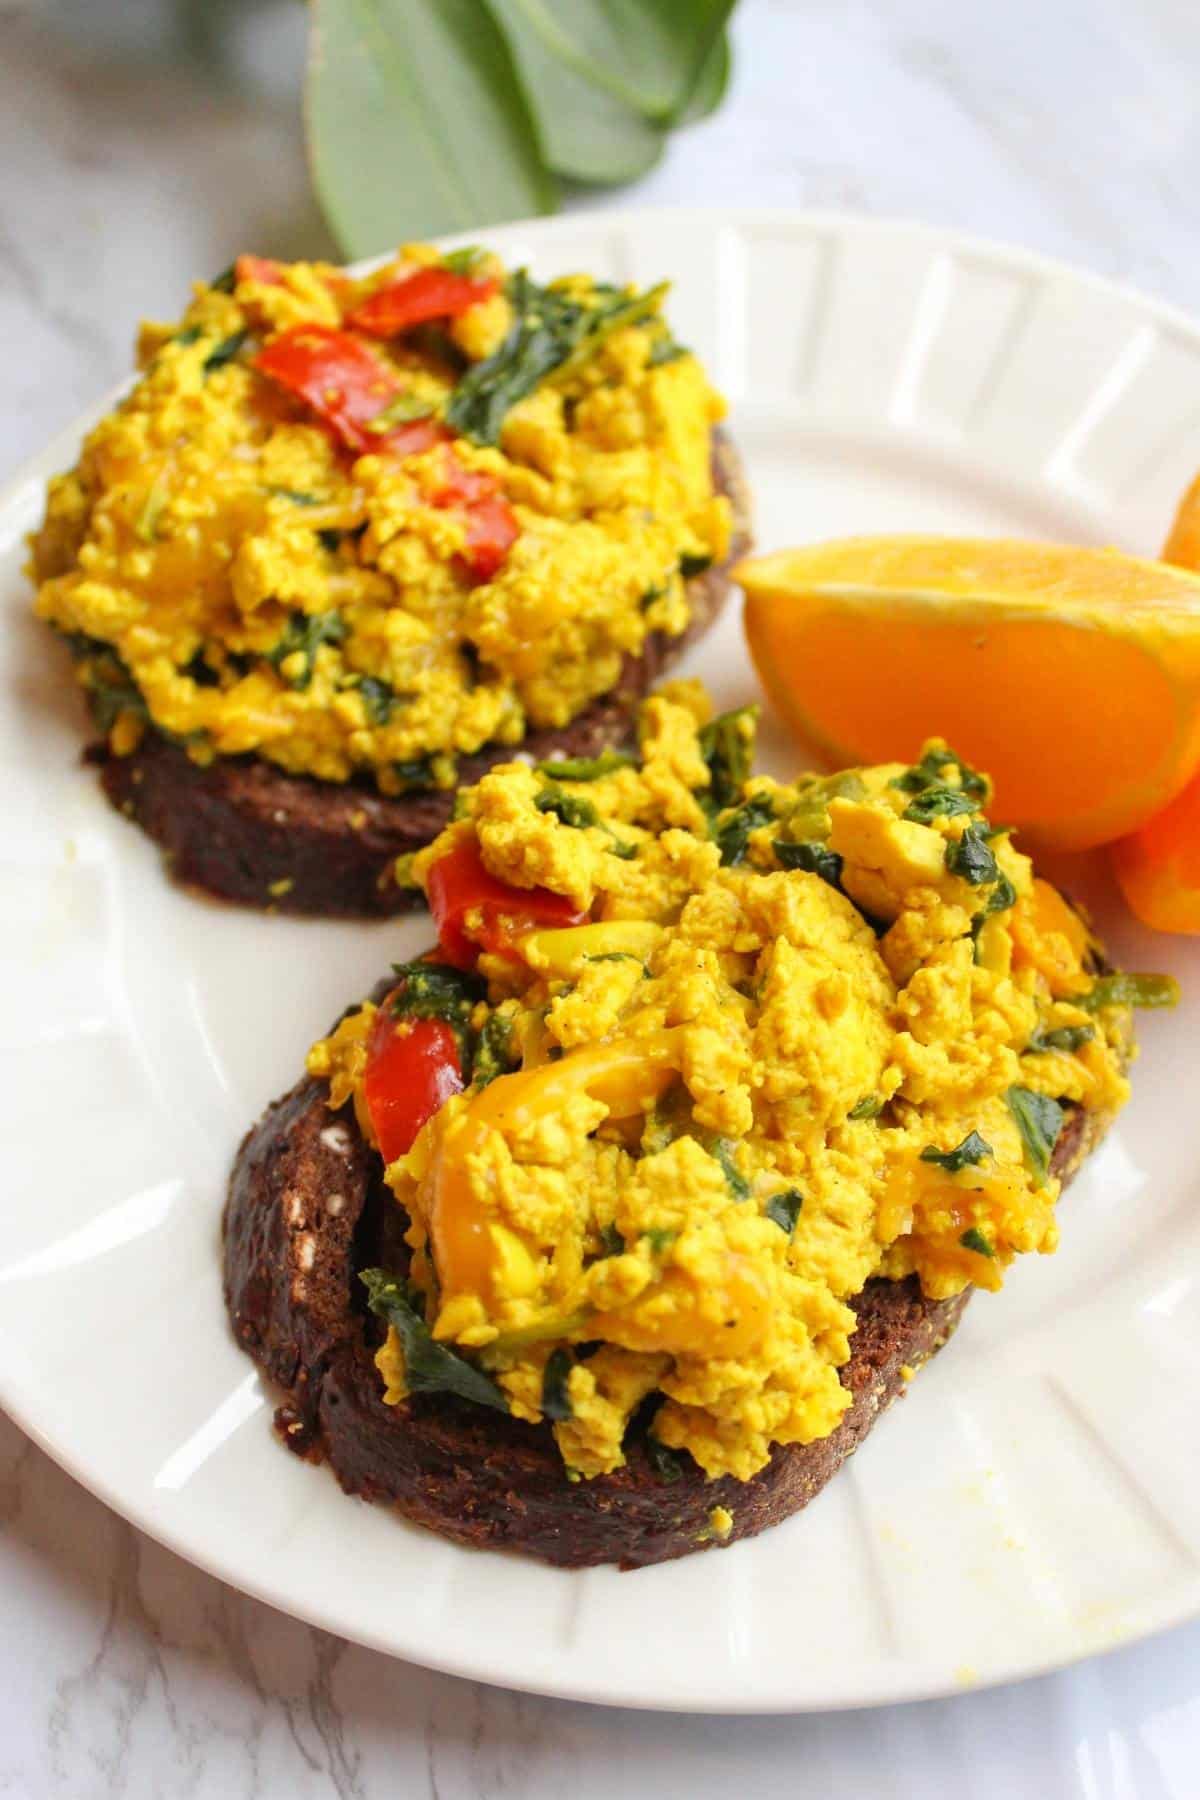 Vegan scrambled eggs on toast